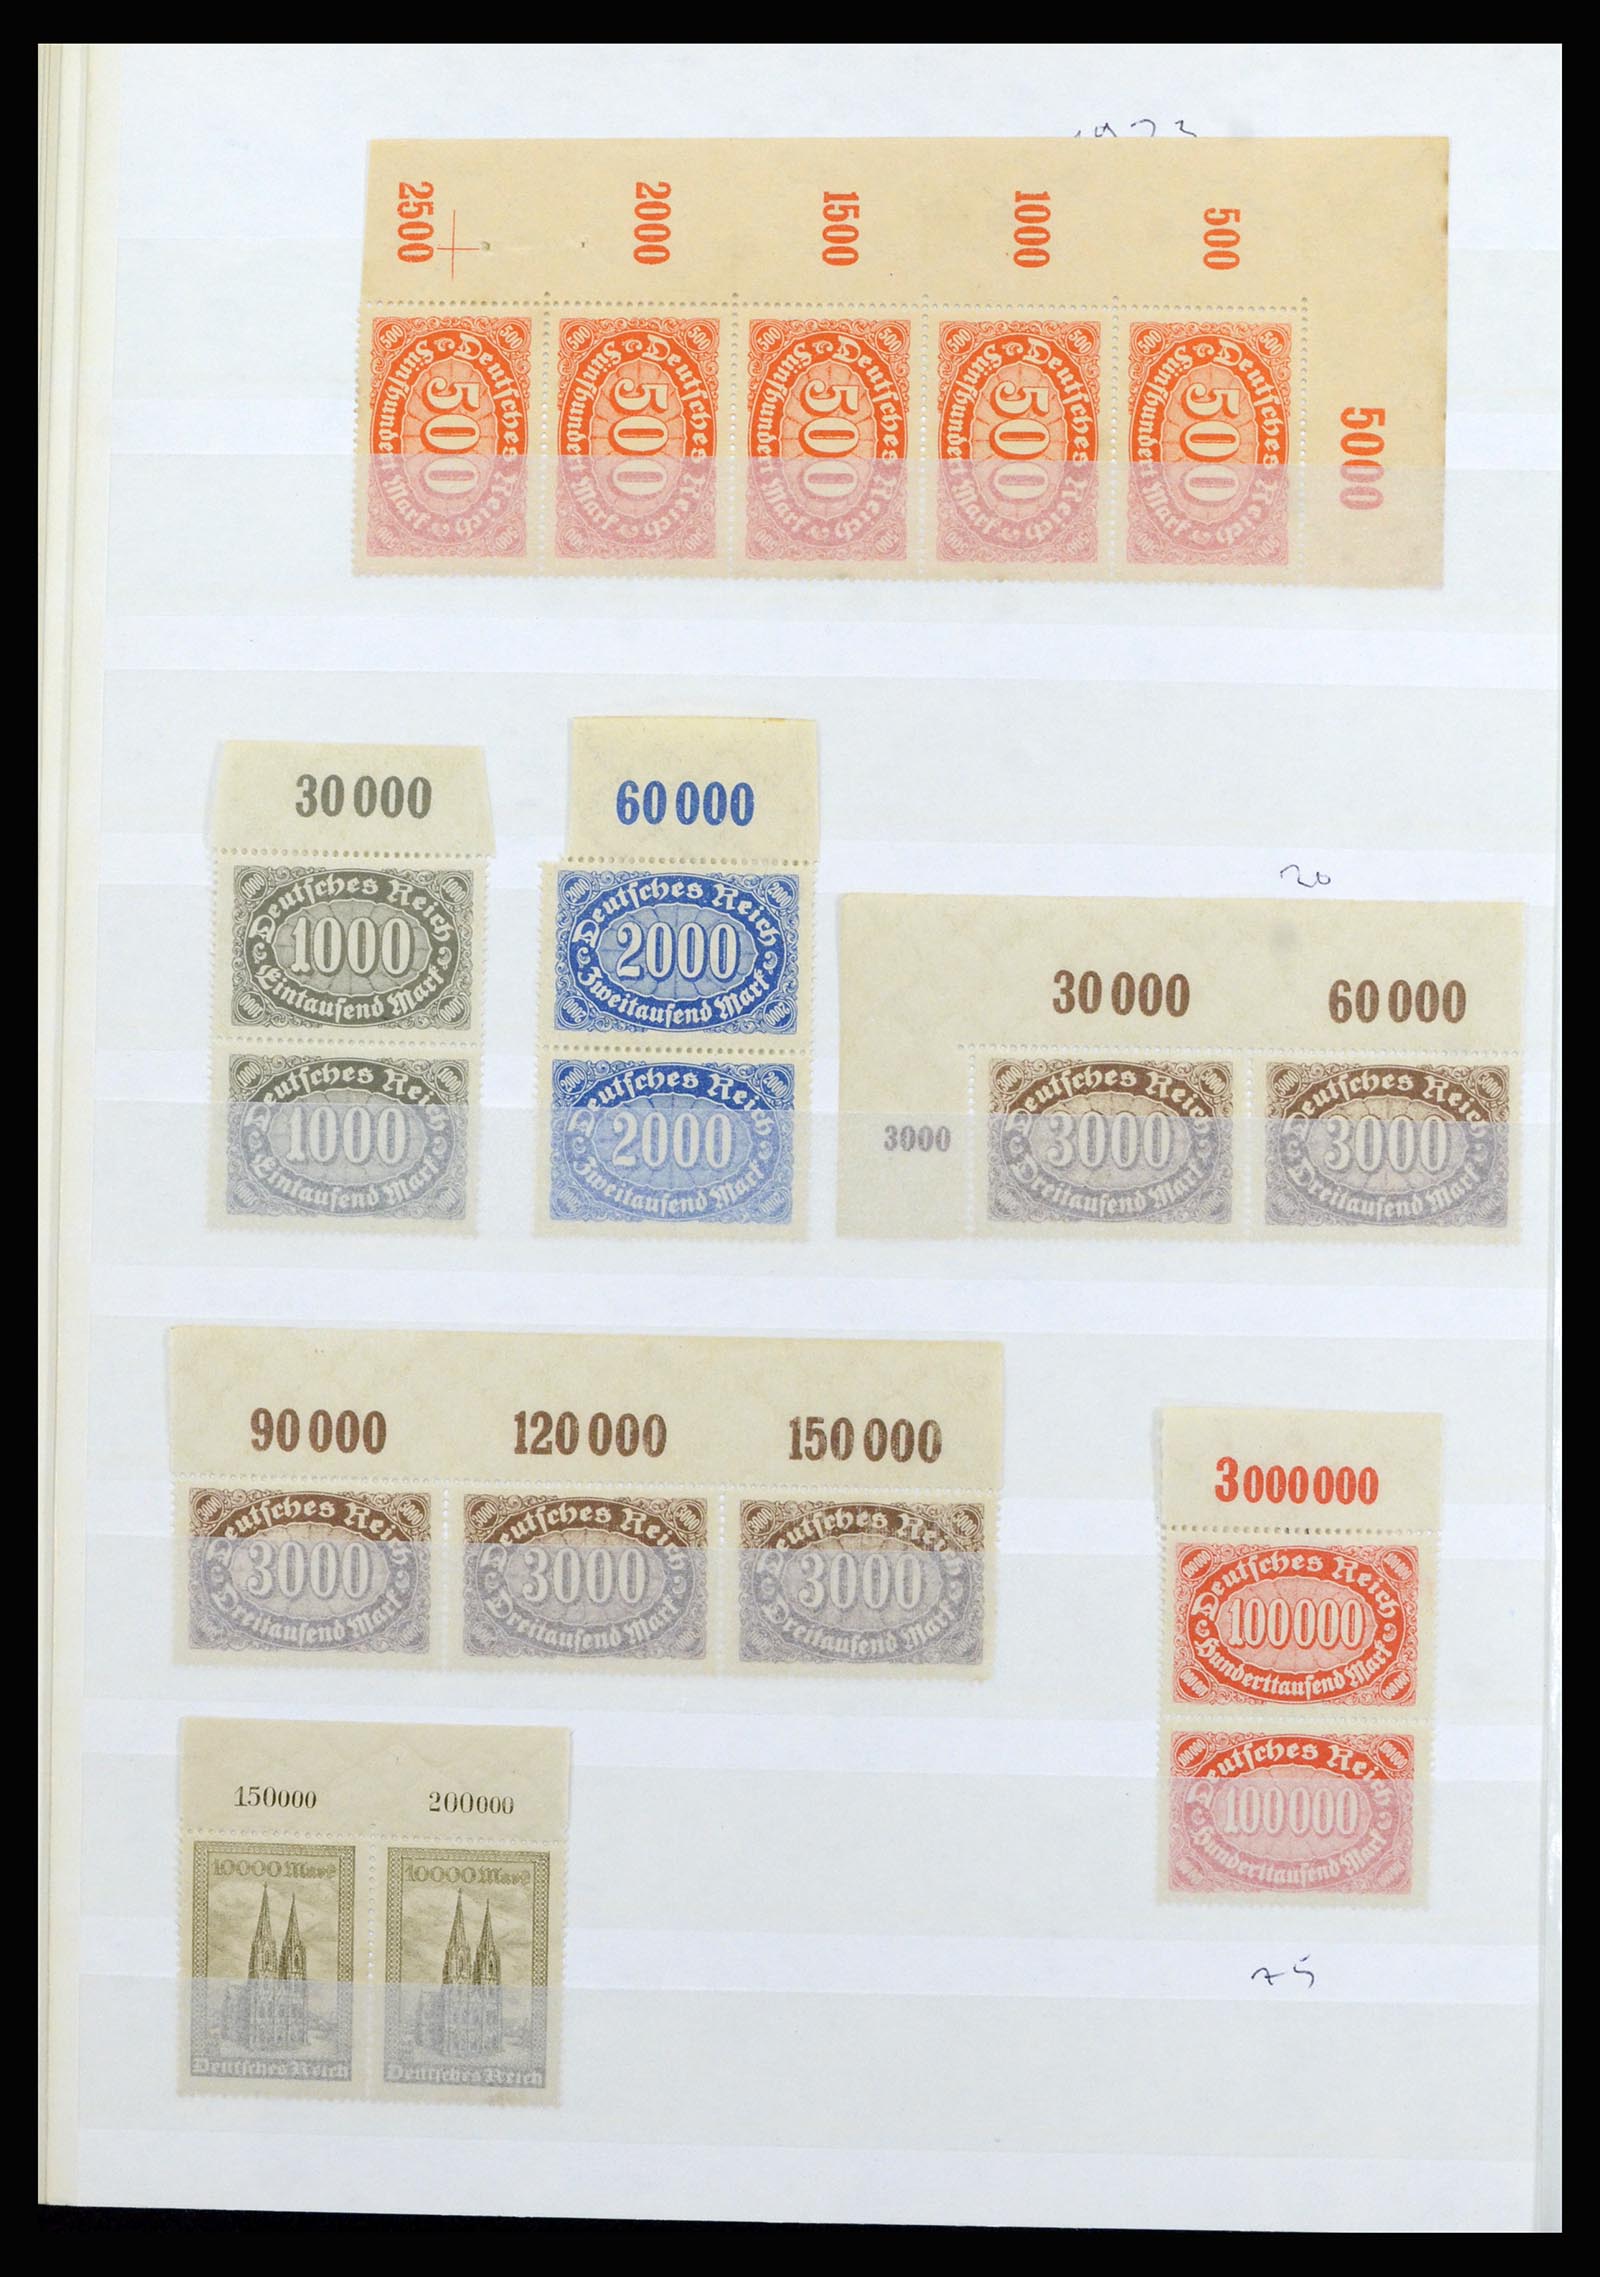 37103 127 - Stamp collection 37103 German Reich 1880-1945.